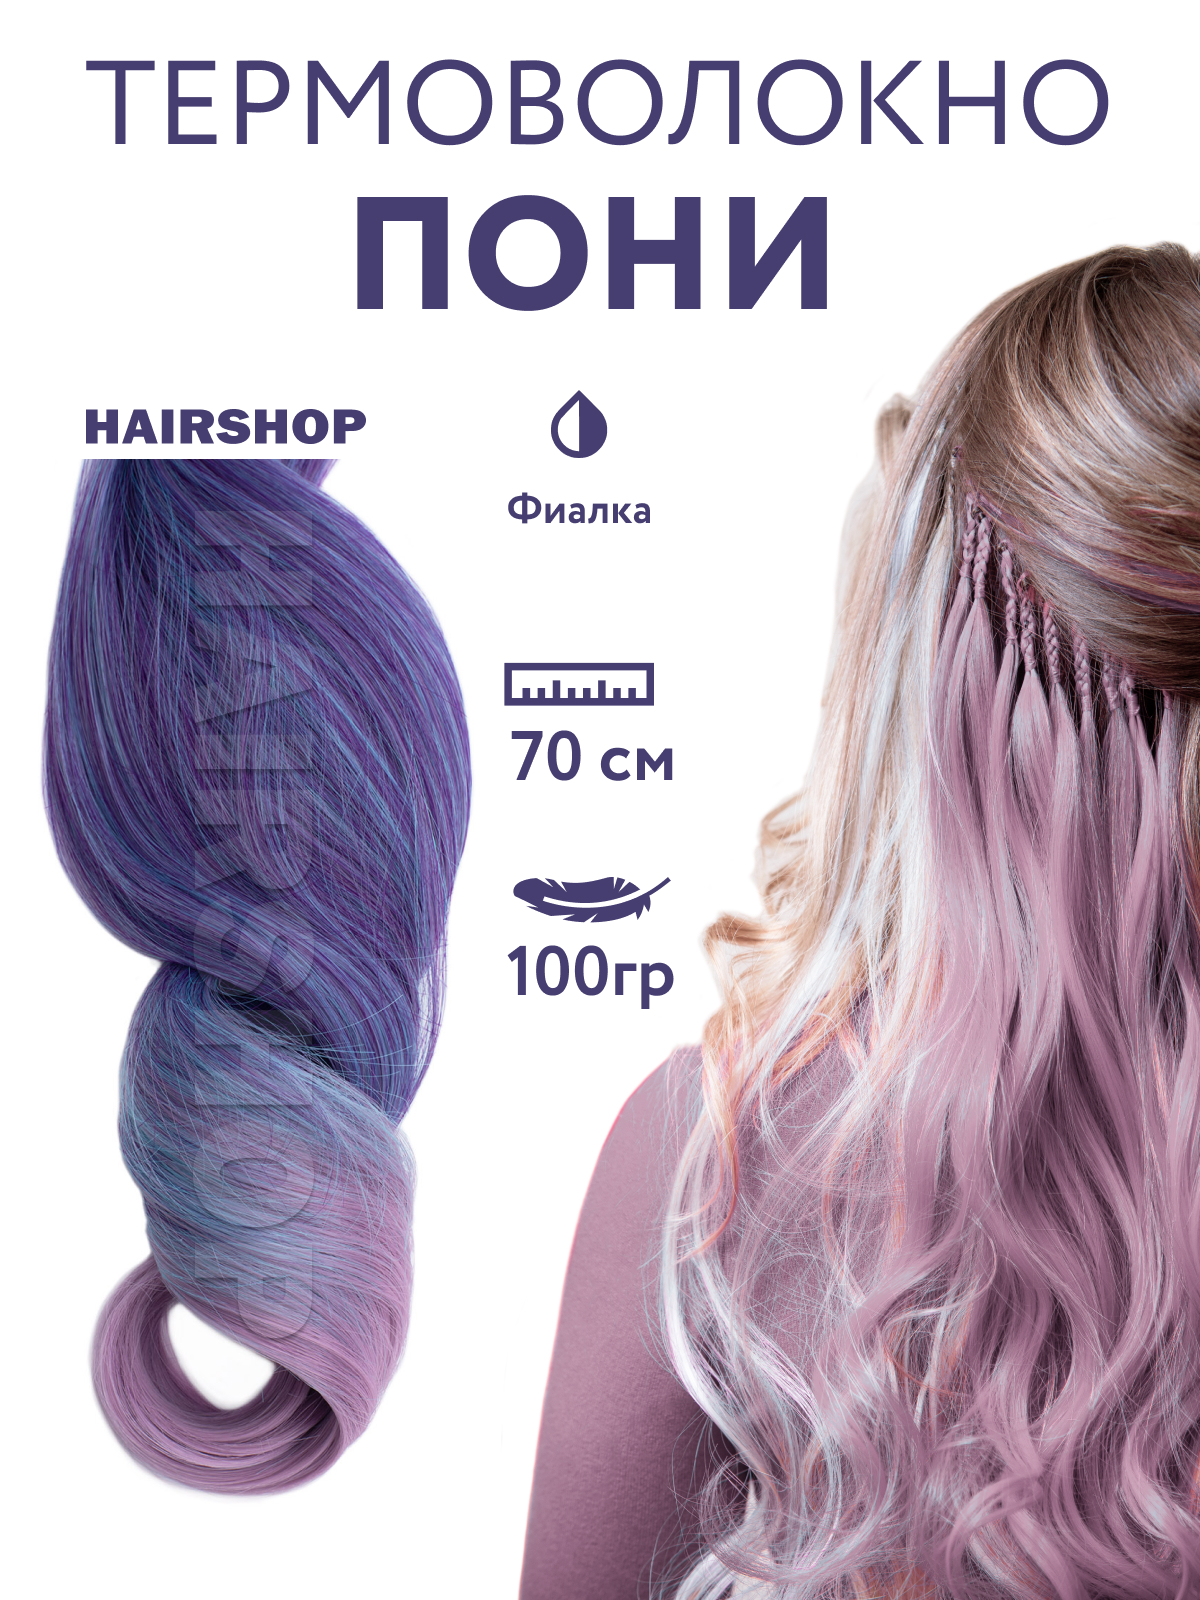 Канекалон Hairshop Пони HairUp для точечного афронаращивания Фиалка 1,4м канекалон hairshop пони hairup для точечного афронаращивания с21 сине голубой 1 4м